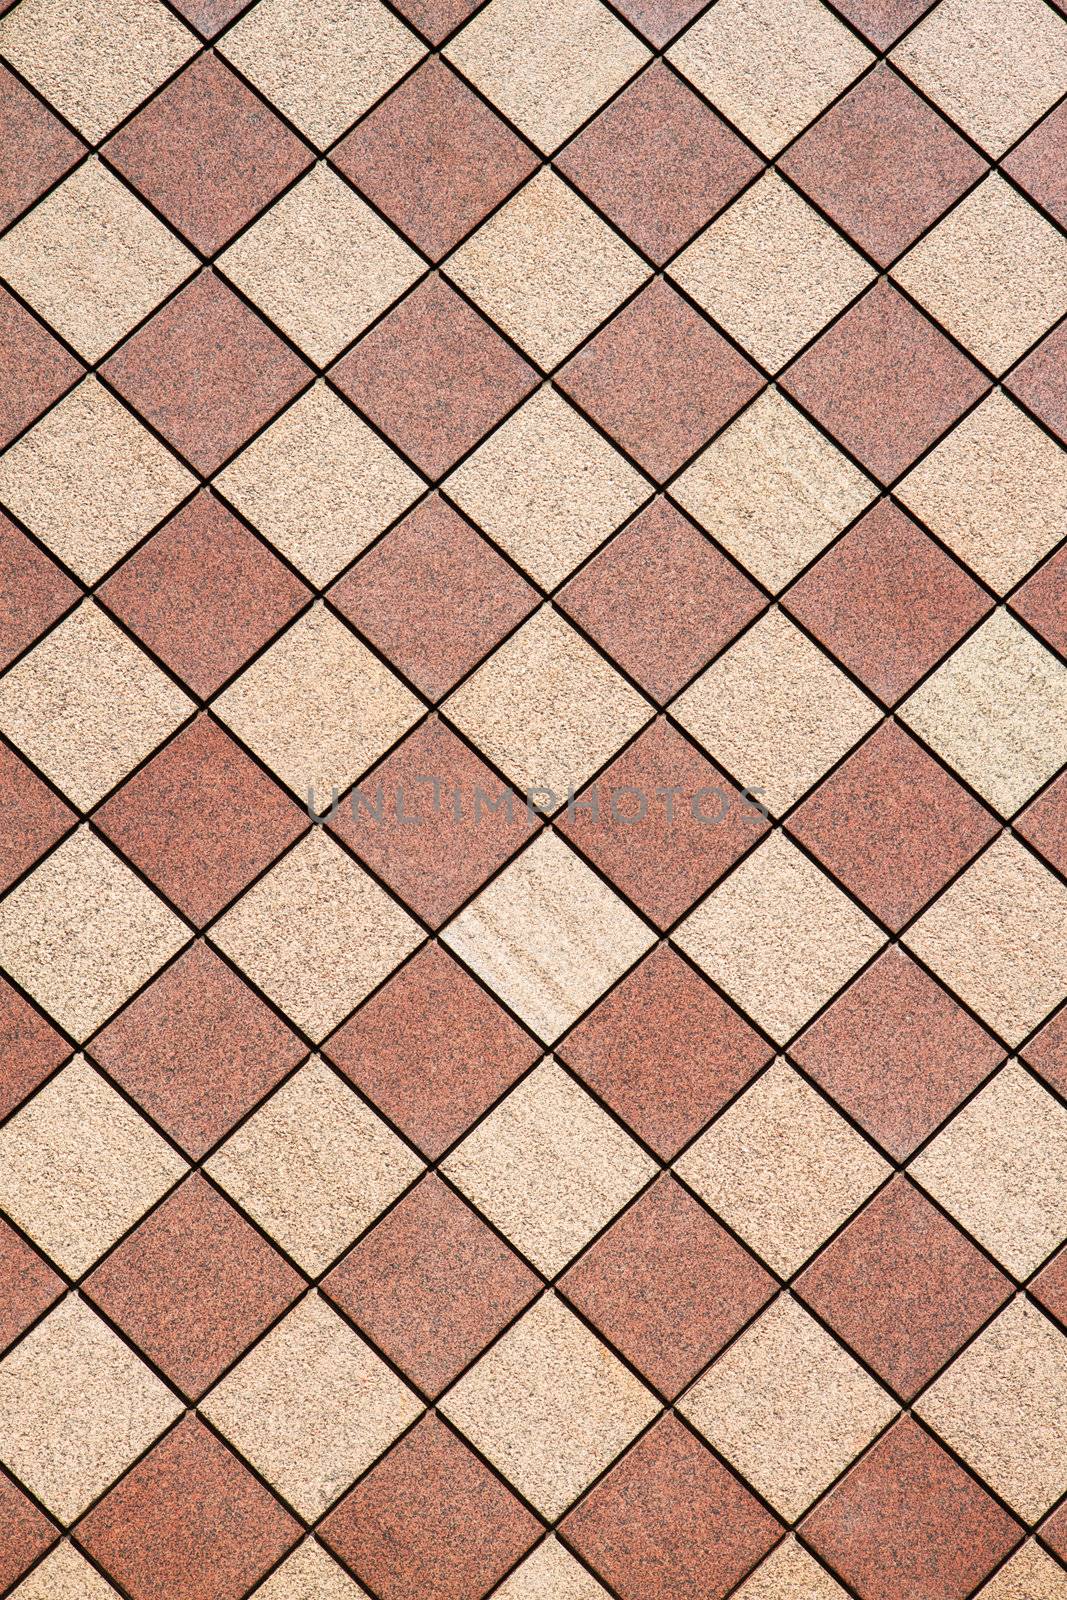 Brown Checkered wall vertical by bobkeenan